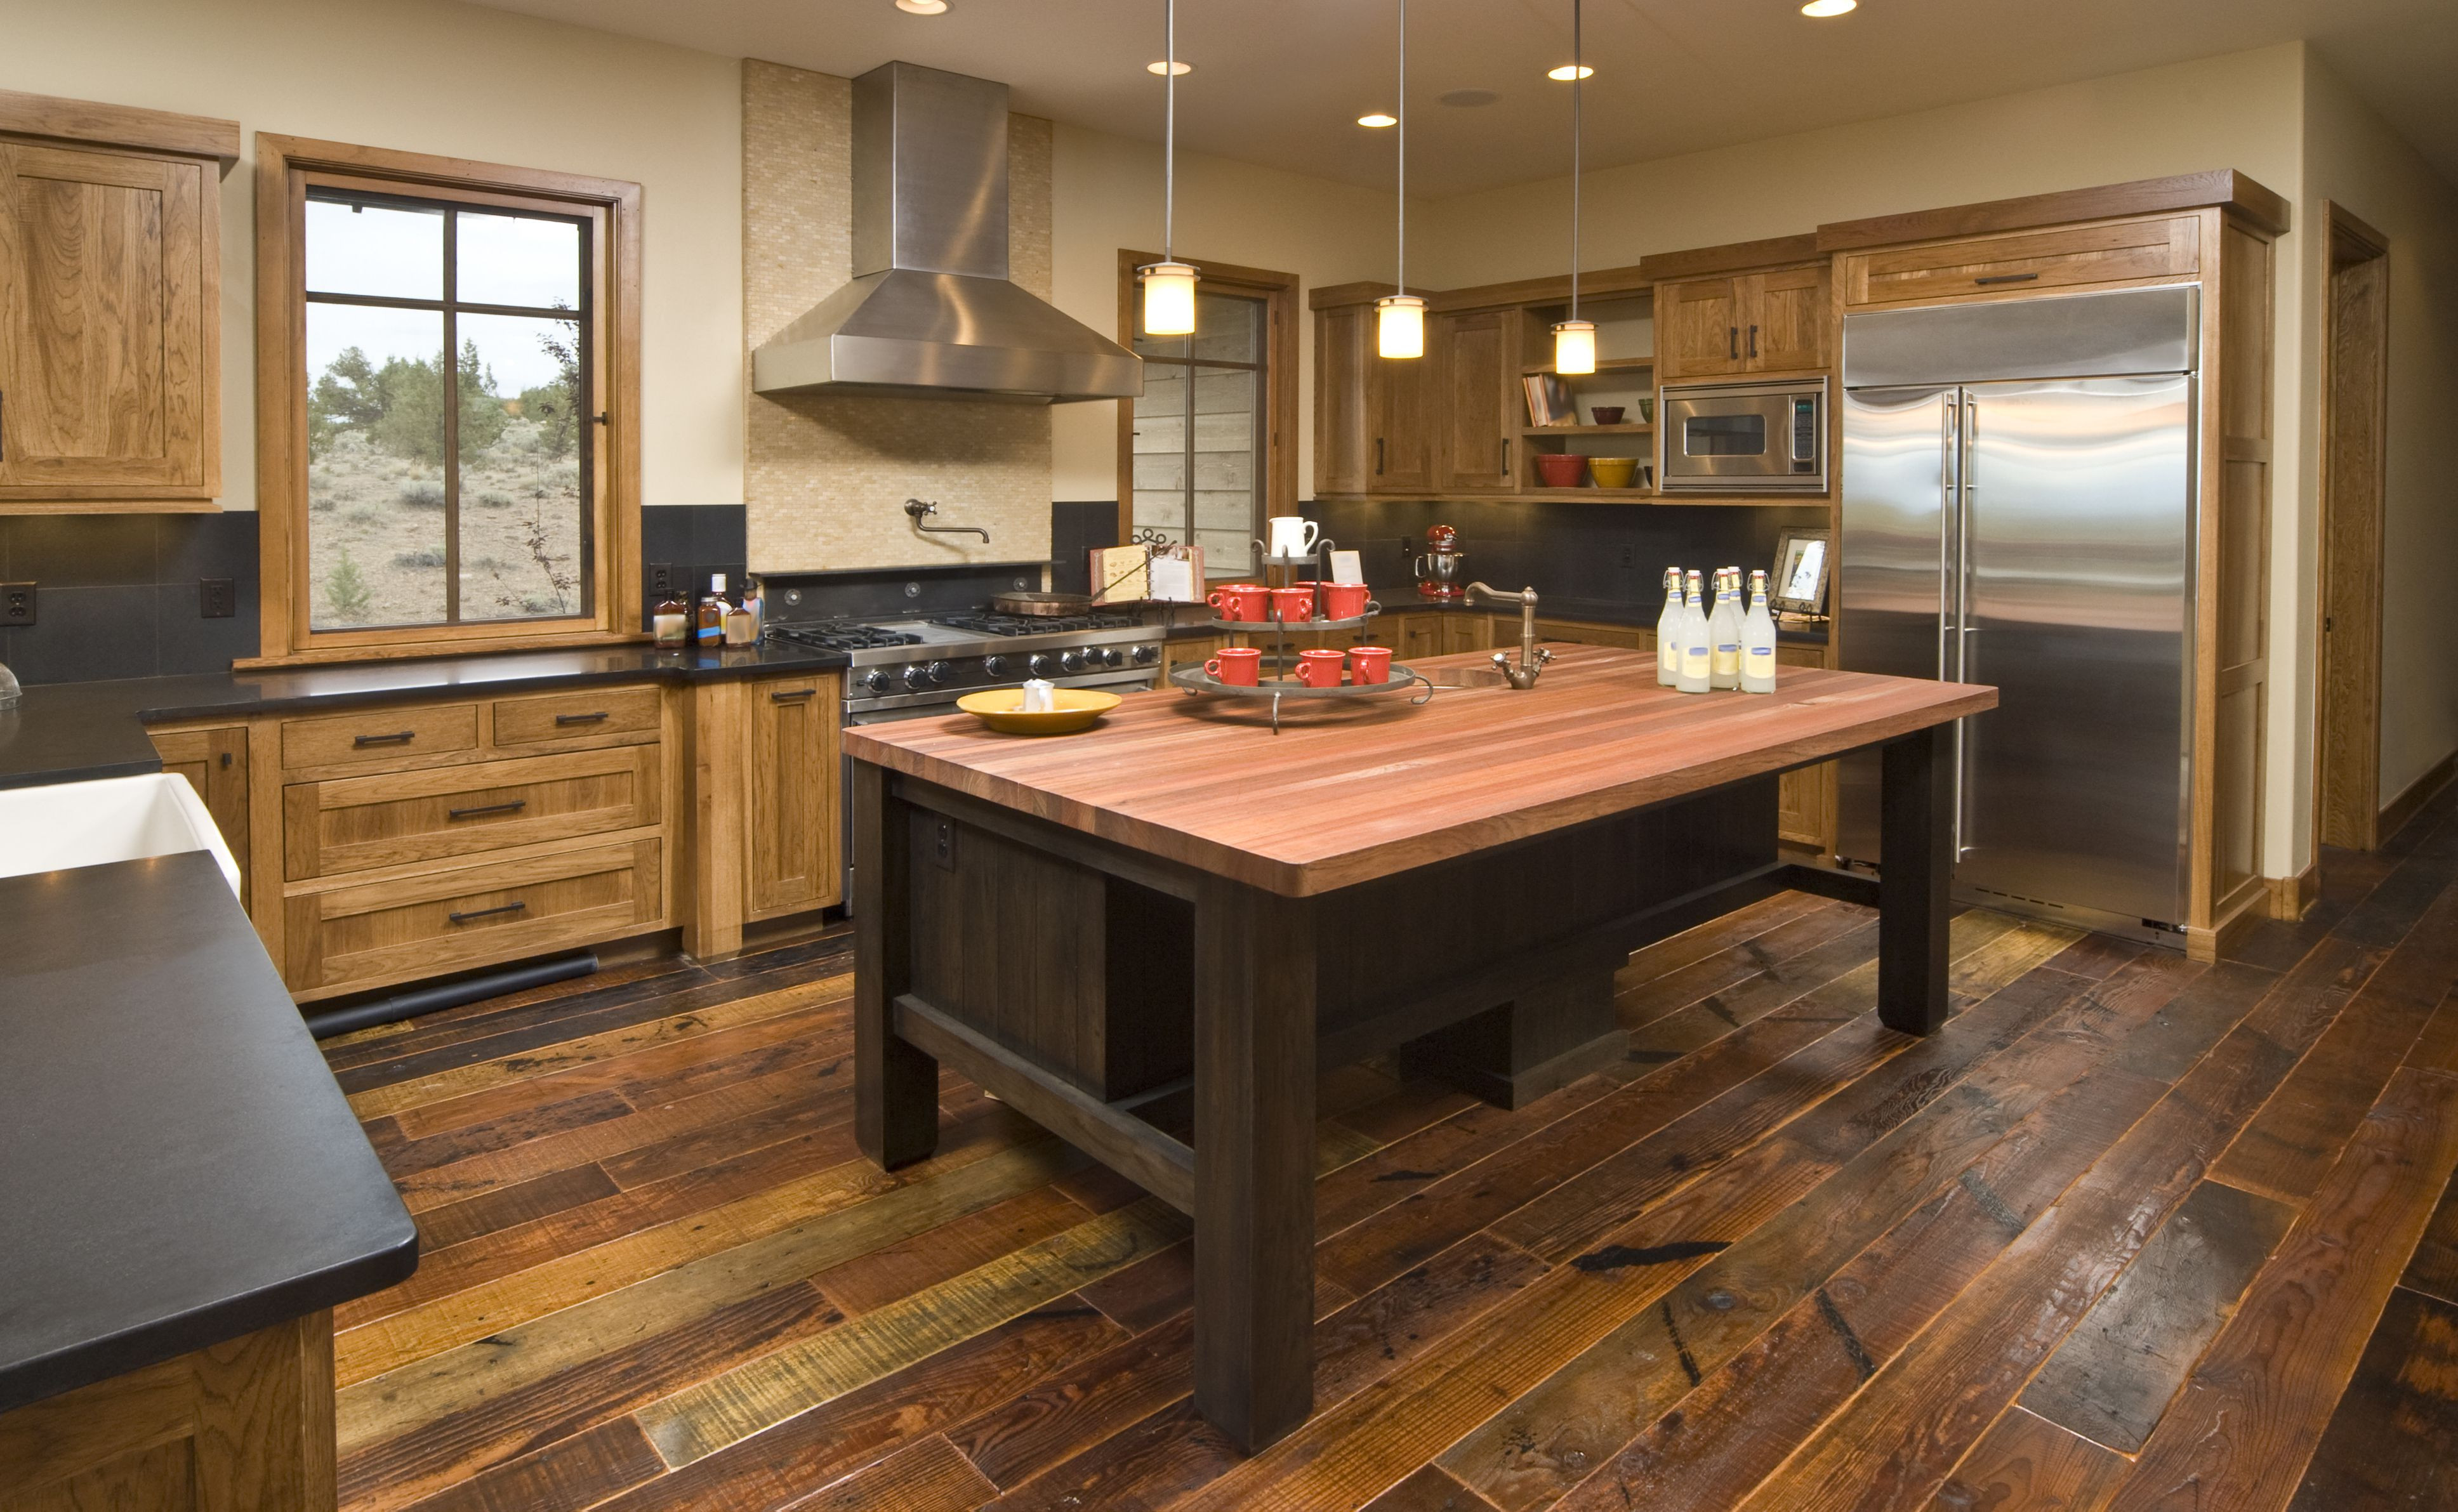 28 Elegant Old Hardwood Floor Ideas 2024 free download old hardwood floor ideas of where to buy reclaimed wood flooring with regard to rustic modern kitchen 157565456 58ae76a73df78c345ba2f5d1